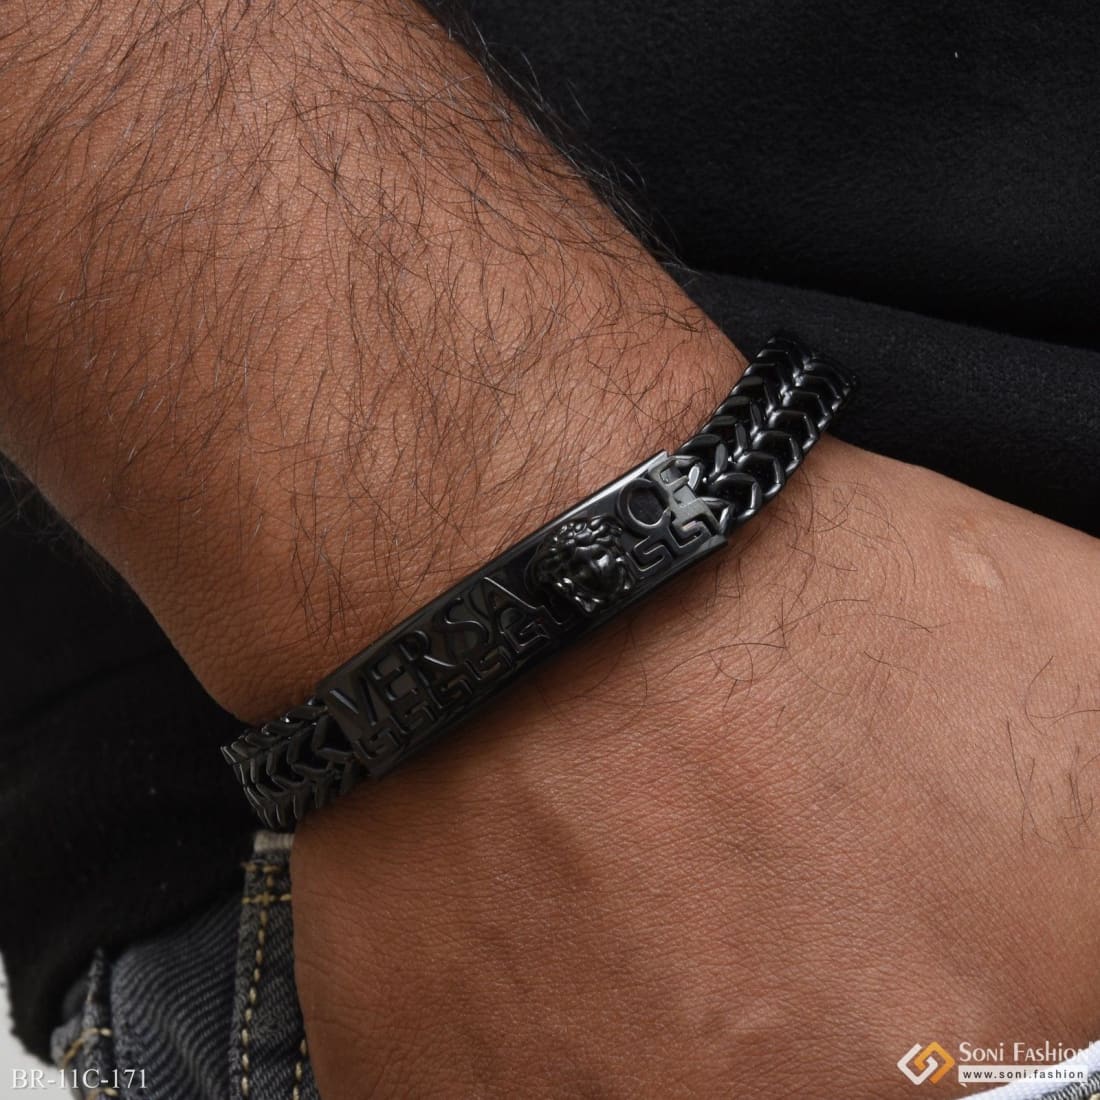 How to make black thread bracelet || kala dhaga design - YouTube